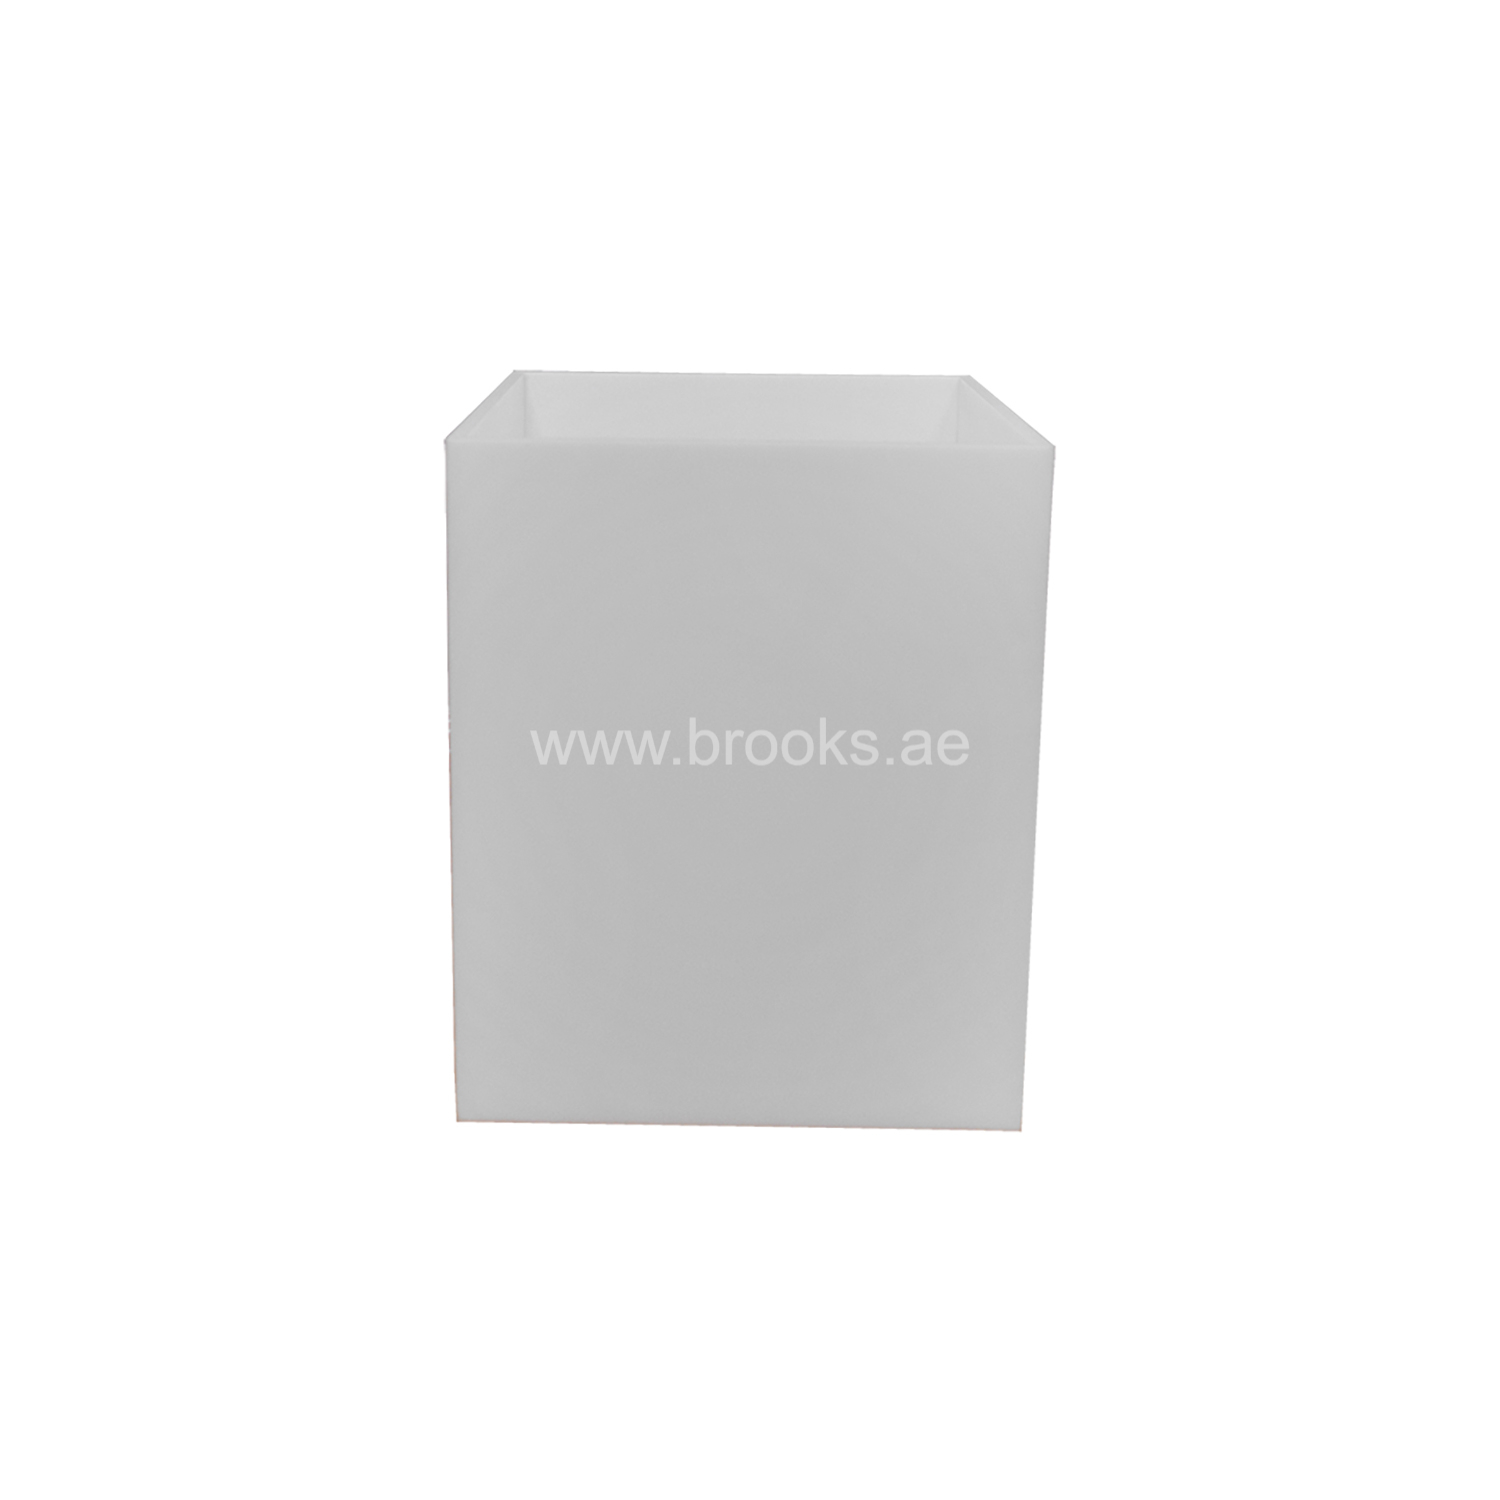 Brooks LESNO White Square Acrylic Open Bin 7Ltr.